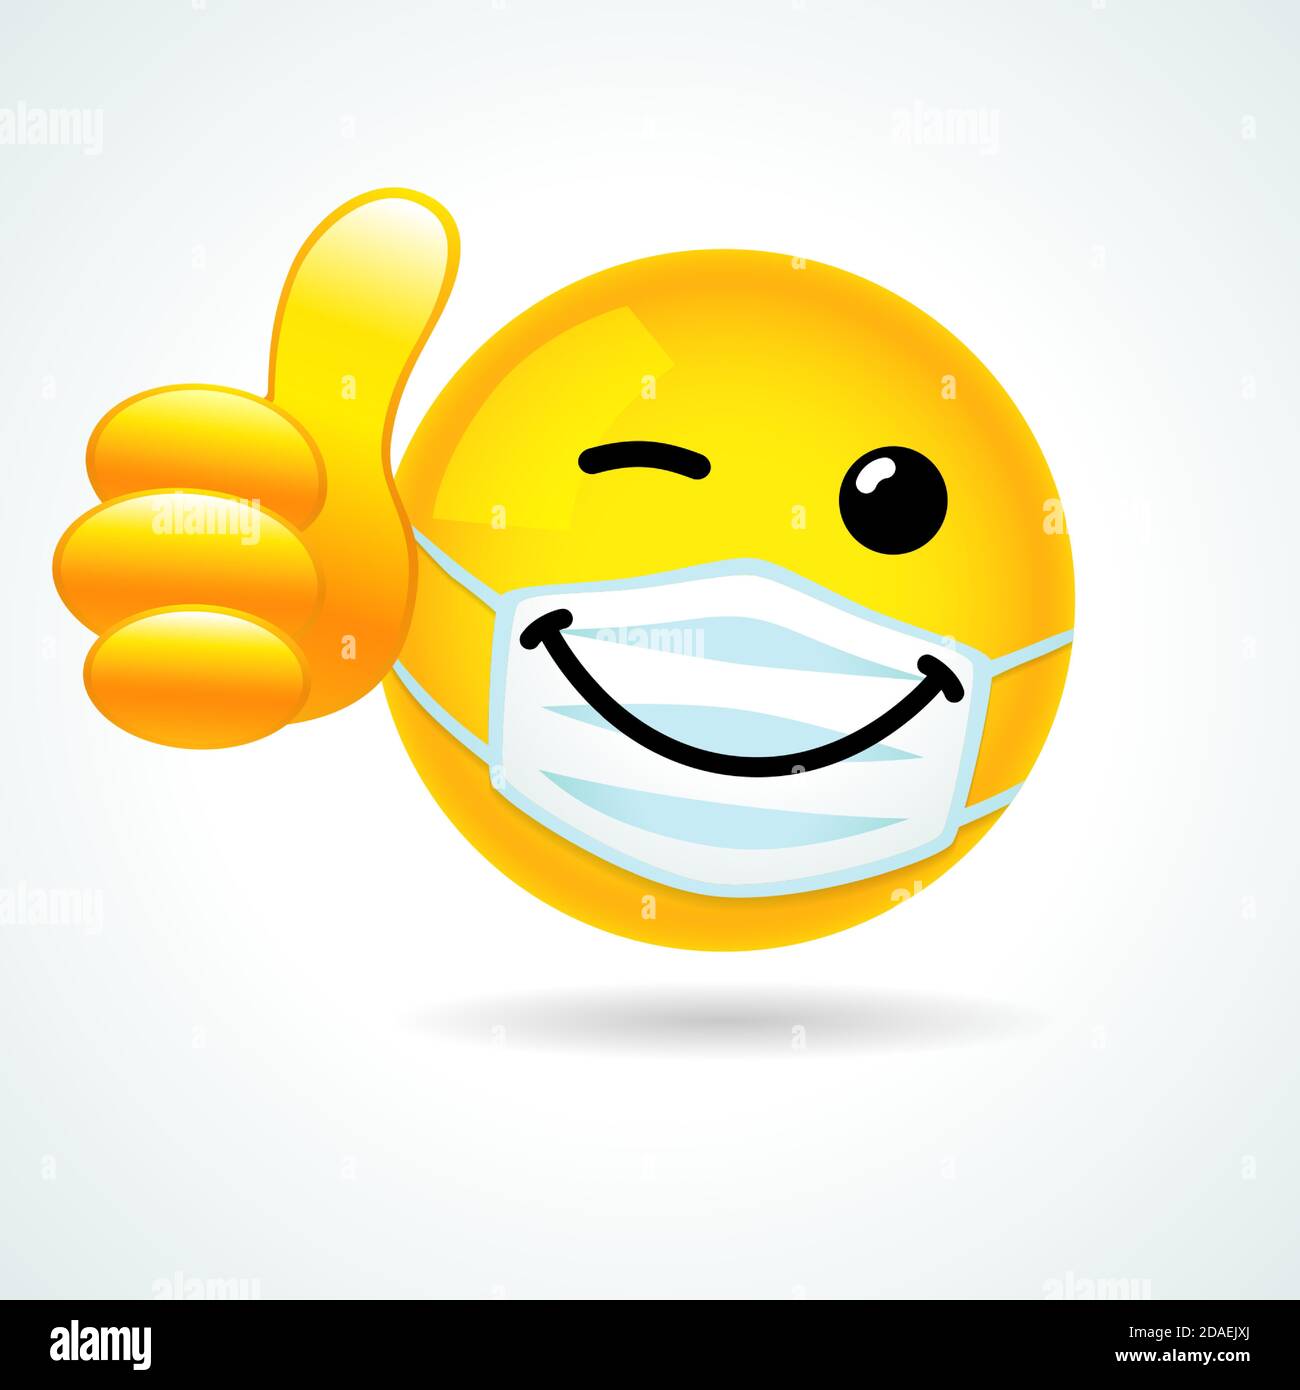 Emoticon Smiley Face Yellow Web Banque D Image Et Photos Page 2 Alamy